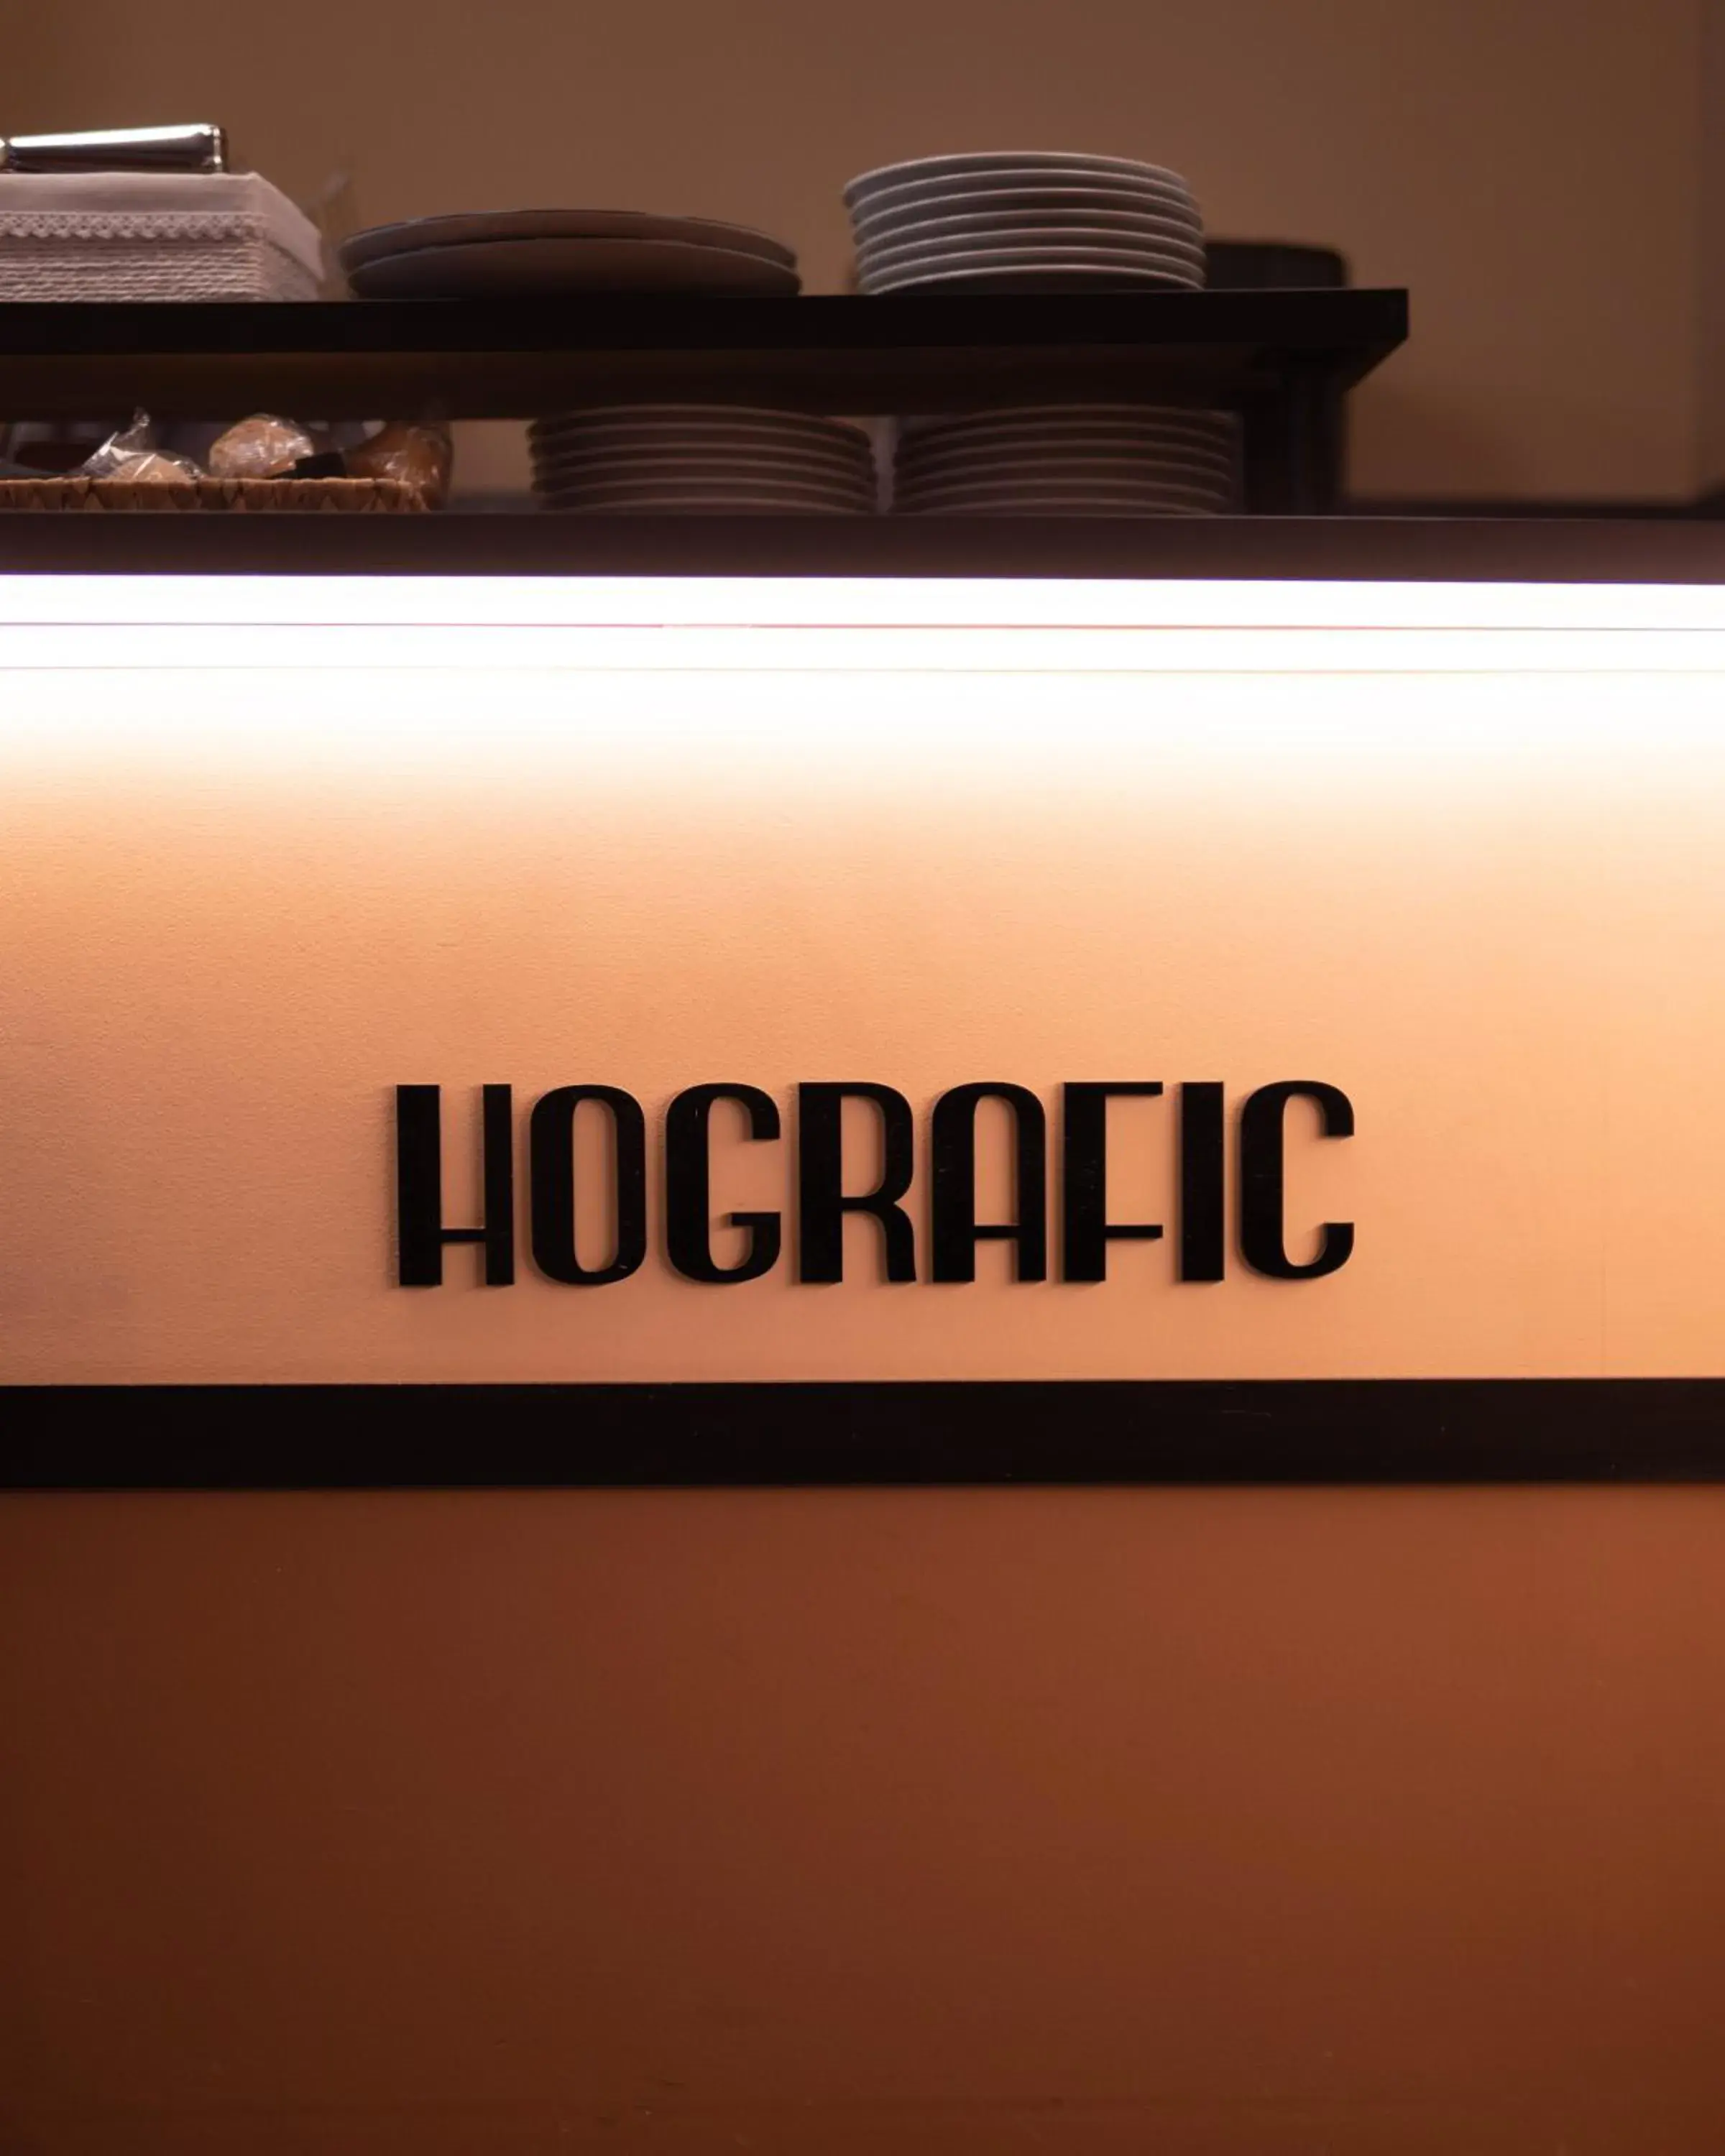 Logo/Certificate/Sign in HoGraFic hotel boutique